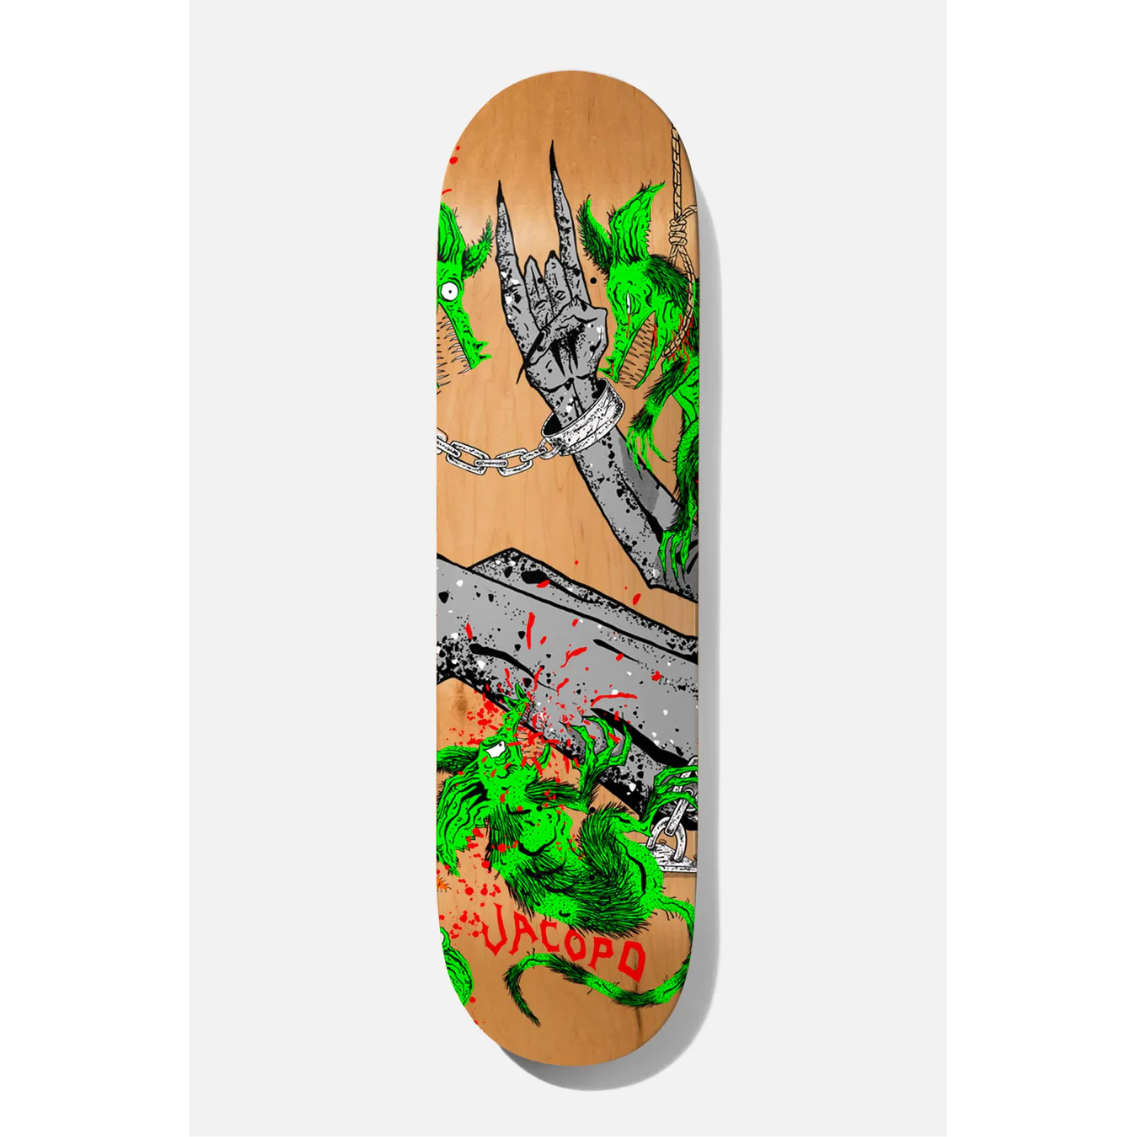 Baker Jacopo Toxic Rats Skateboard Deck - 8.25